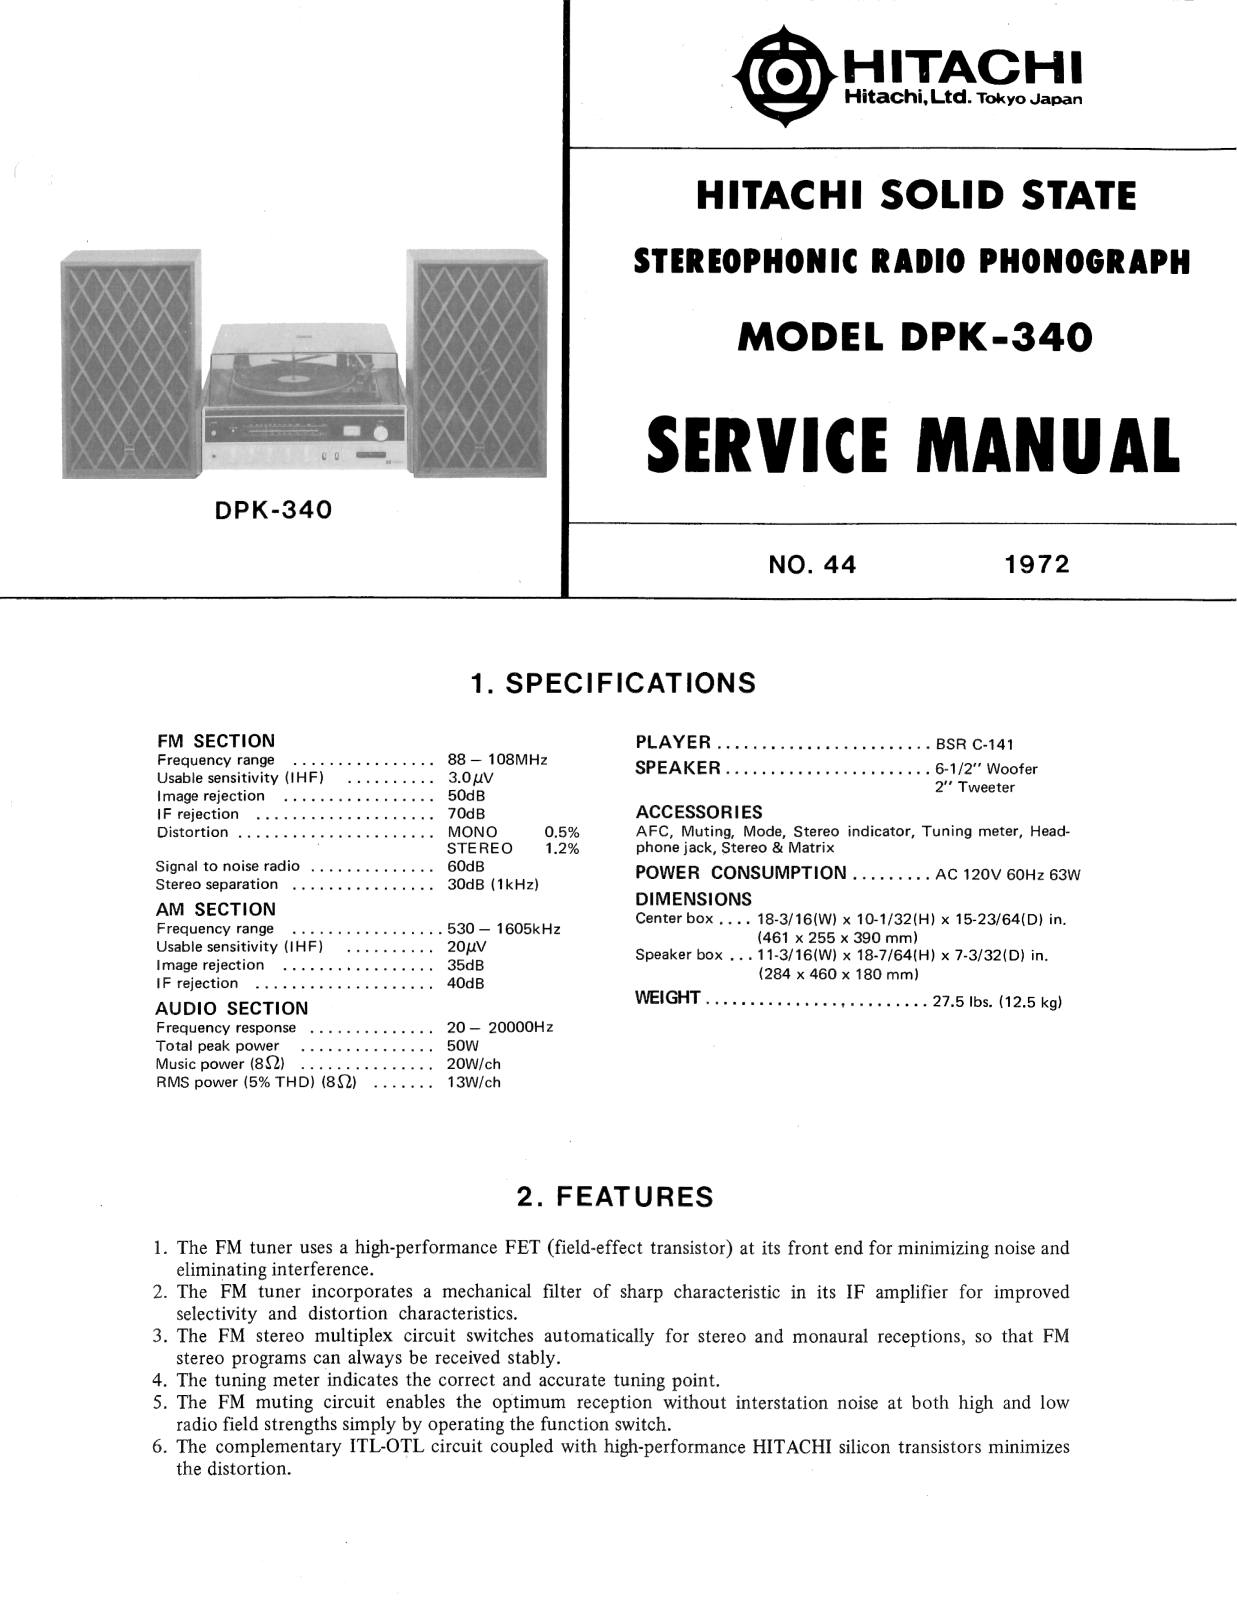 Hitachi DPK-340 Service Manual